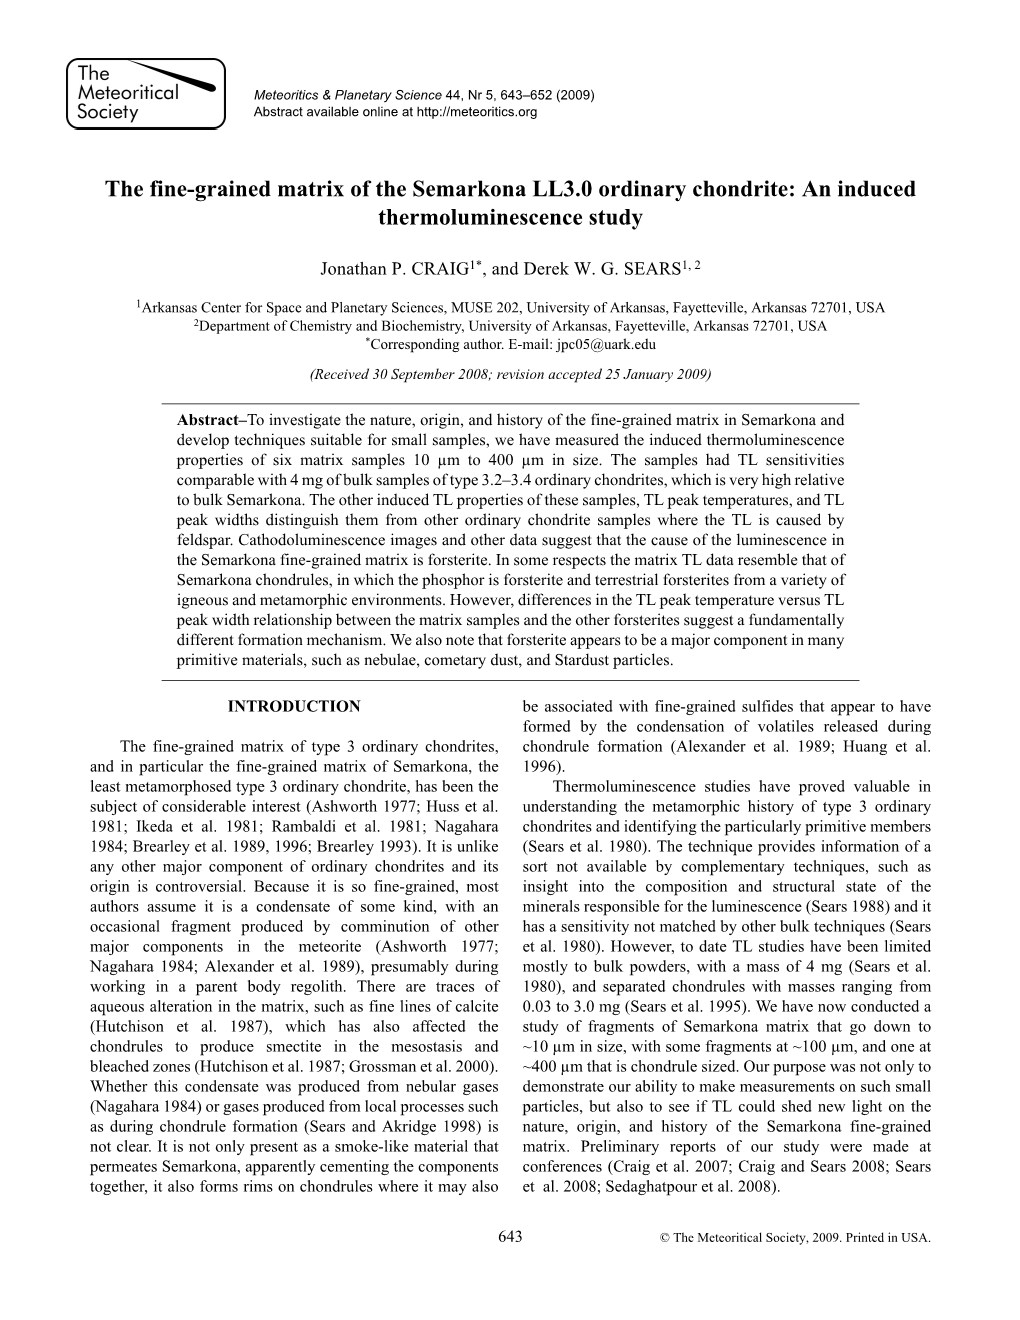 The Fine-Grained Matrix of the Semarkona LL3.0 Ordinary Chondrite: an Induced Thermoluminescence Study